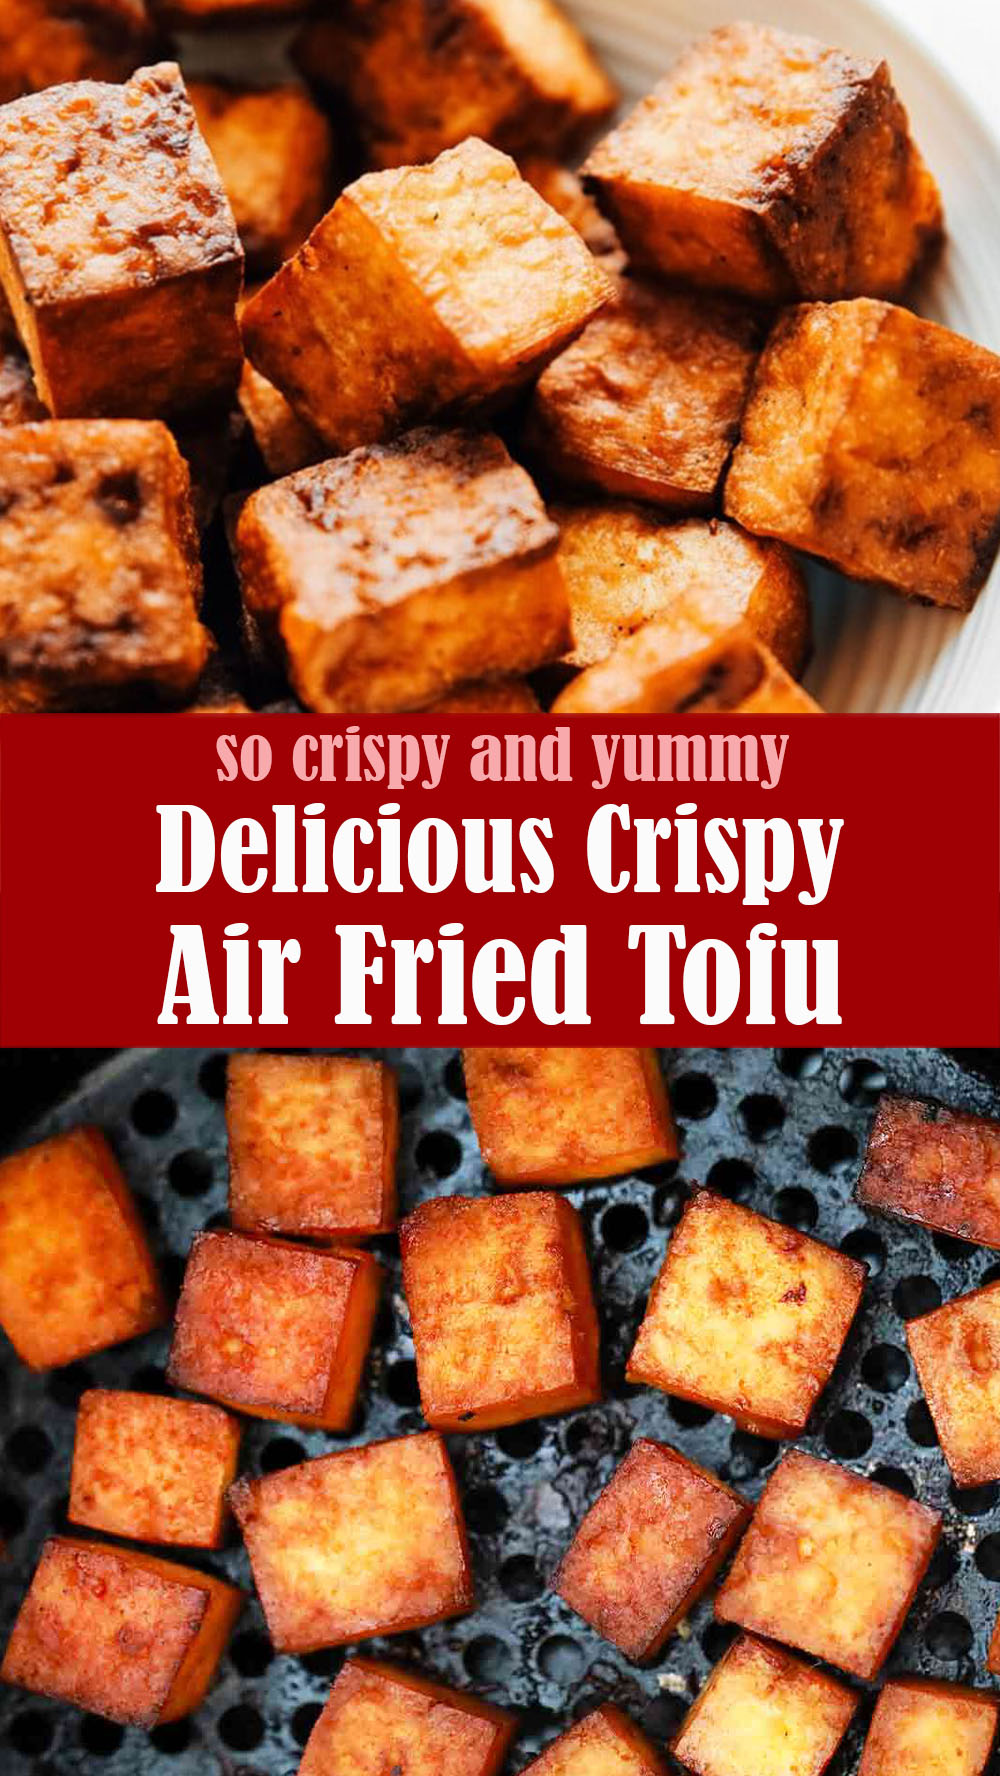 Delicious Crispy Air Fried Tofu